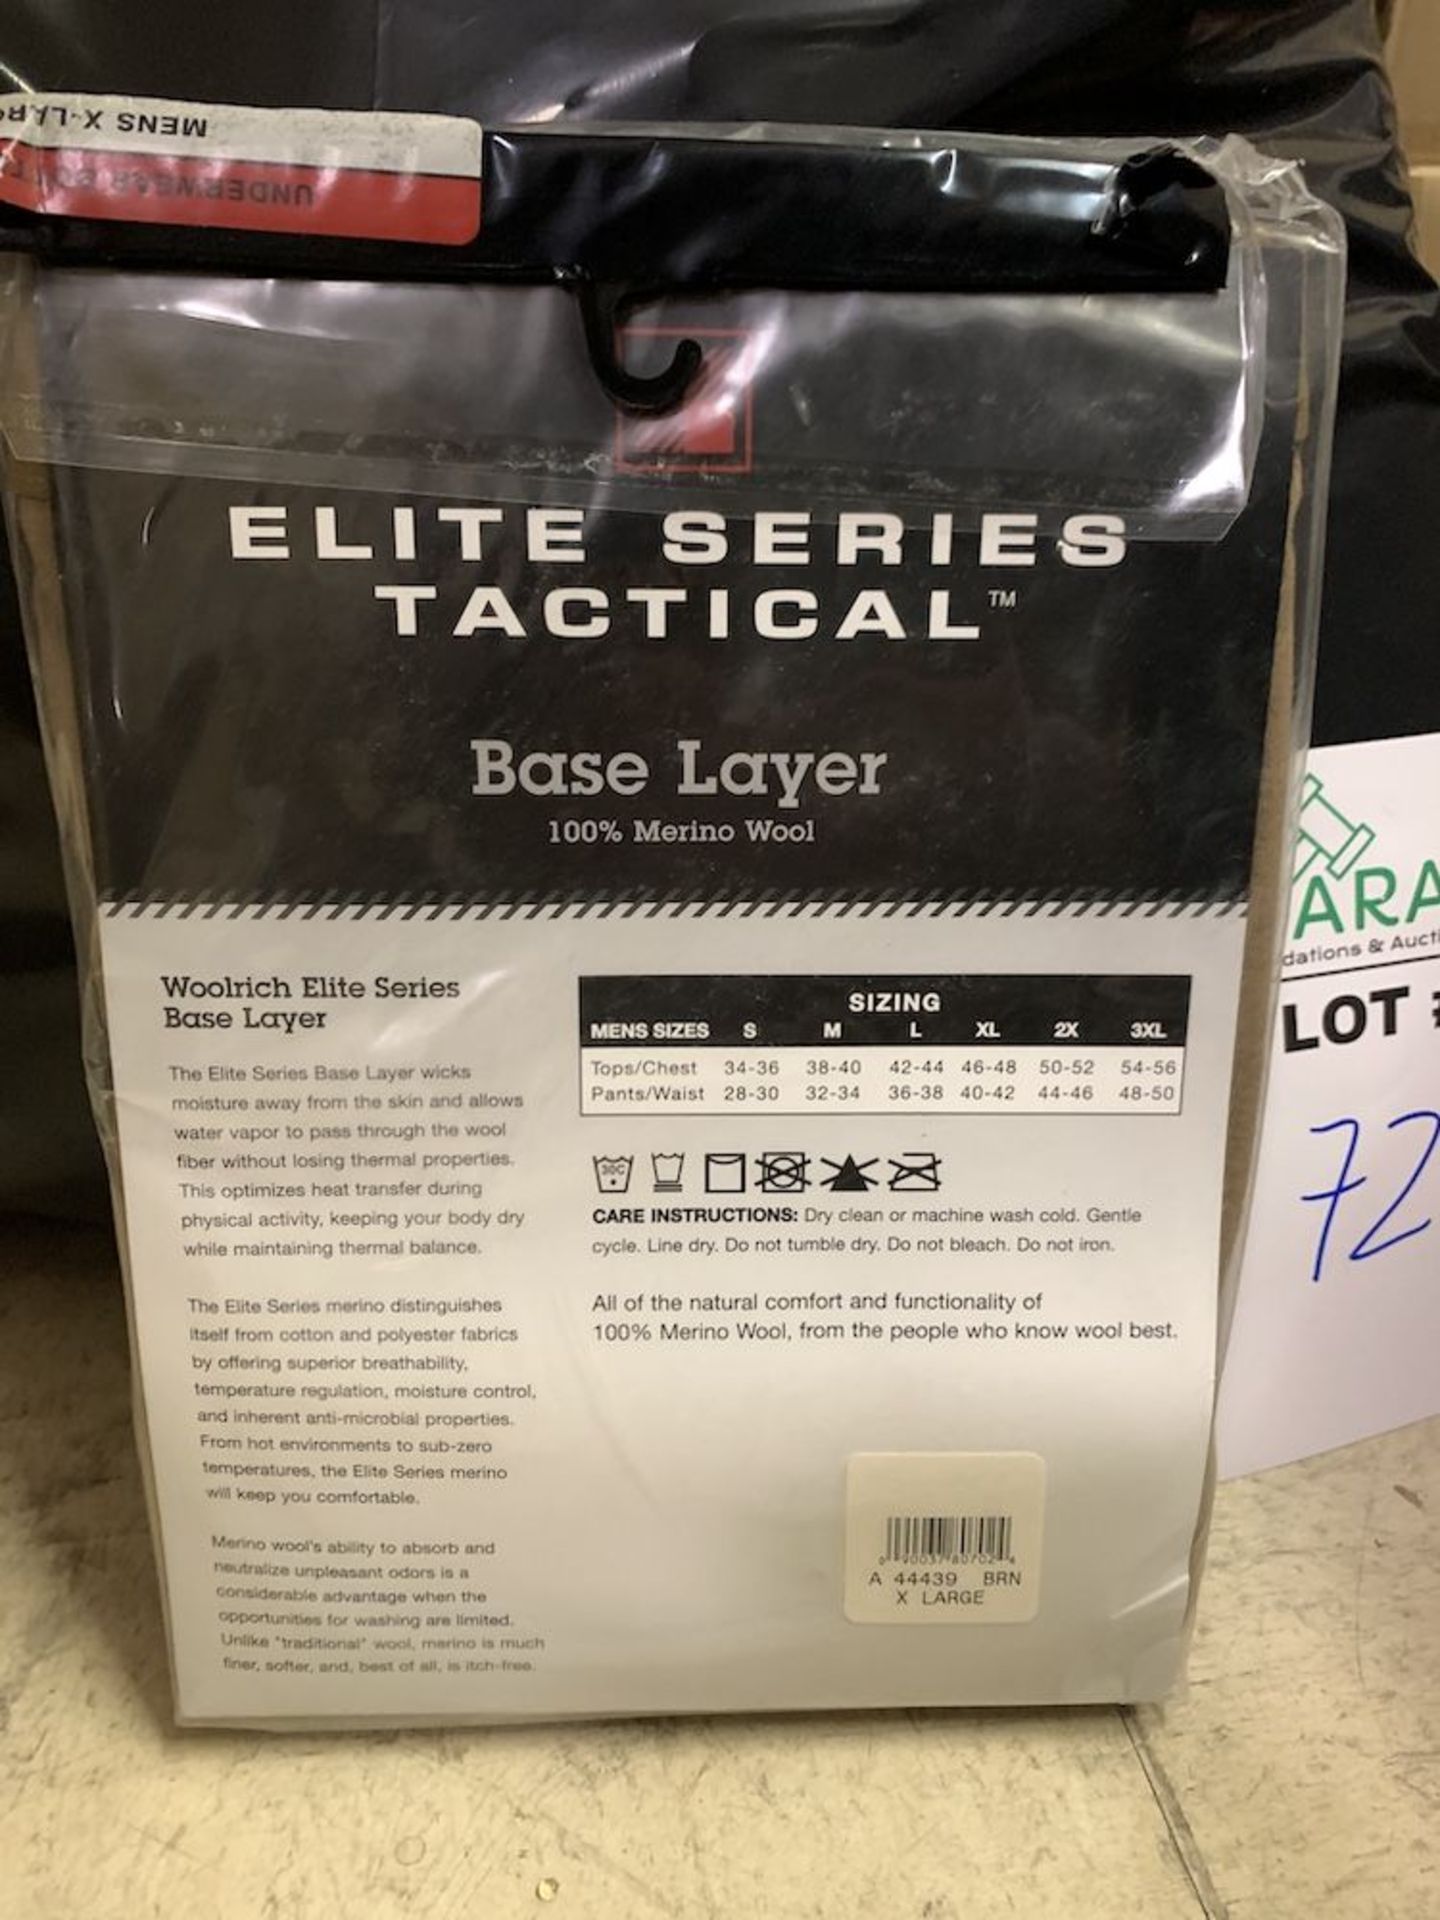 45 Pairs of Elite Series Tactical Base Layer Pants, New in Packaging, Brown, Merino Wool, Retail - Image 4 of 4